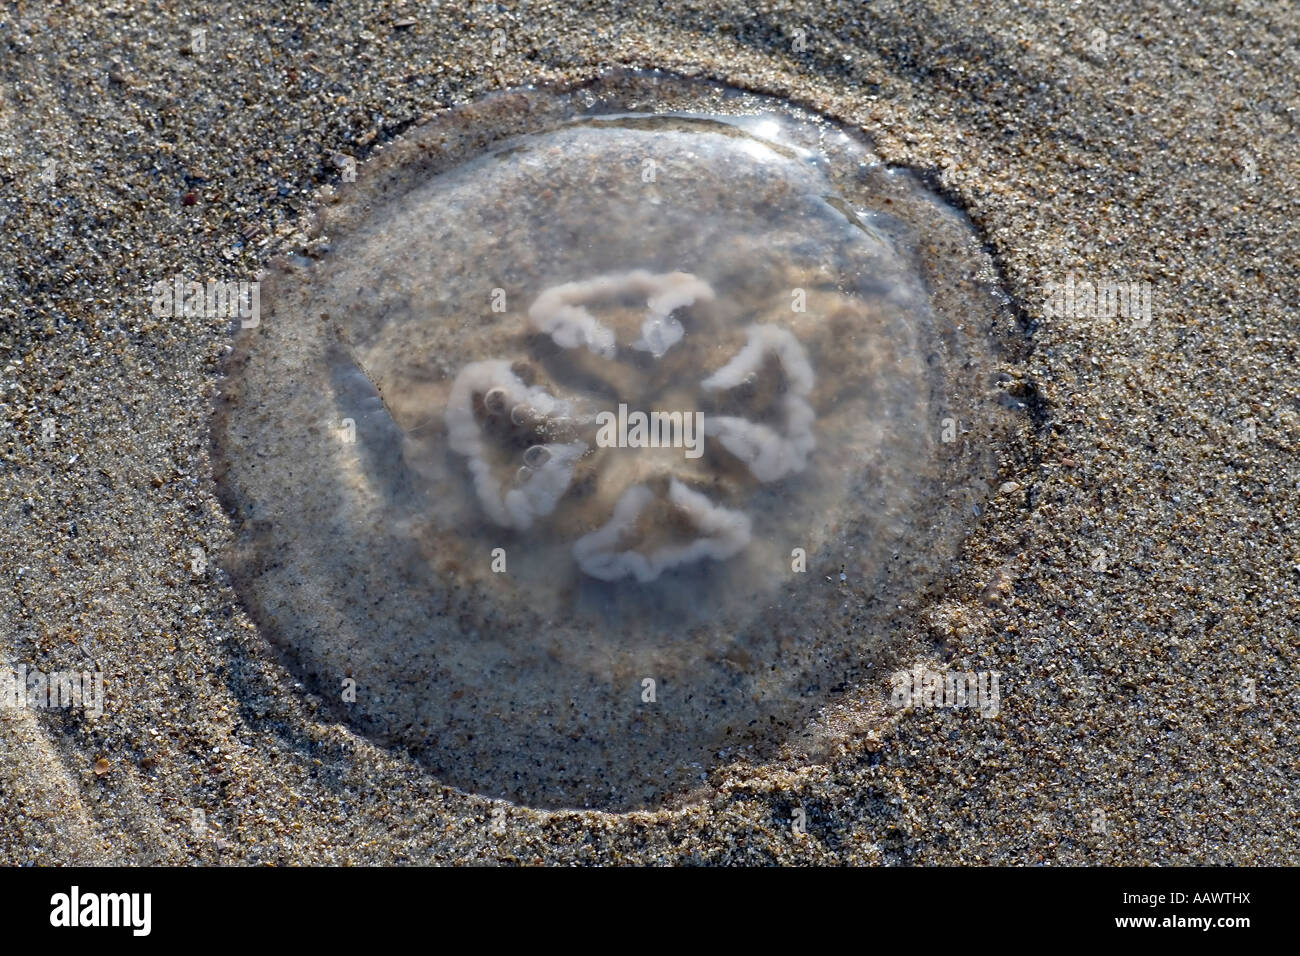 Washed ashore jellyfish, Aurelia aurita, Stock Photo